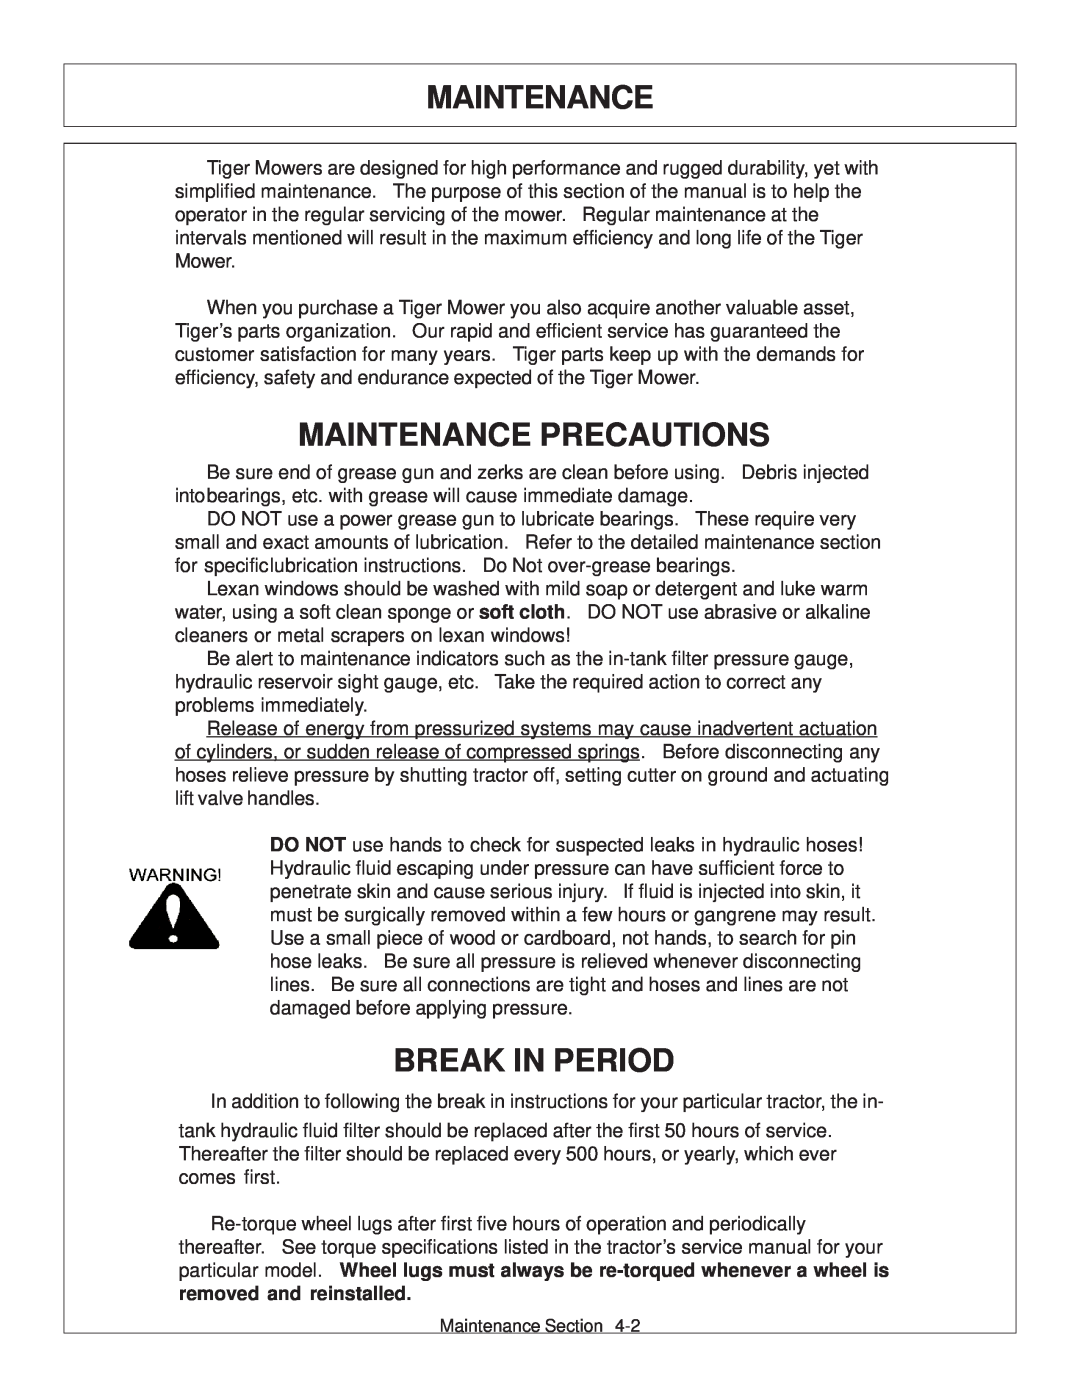 Tiger Products Co., Ltd TS 100A manual Maintenance Precautions, Break In Period 